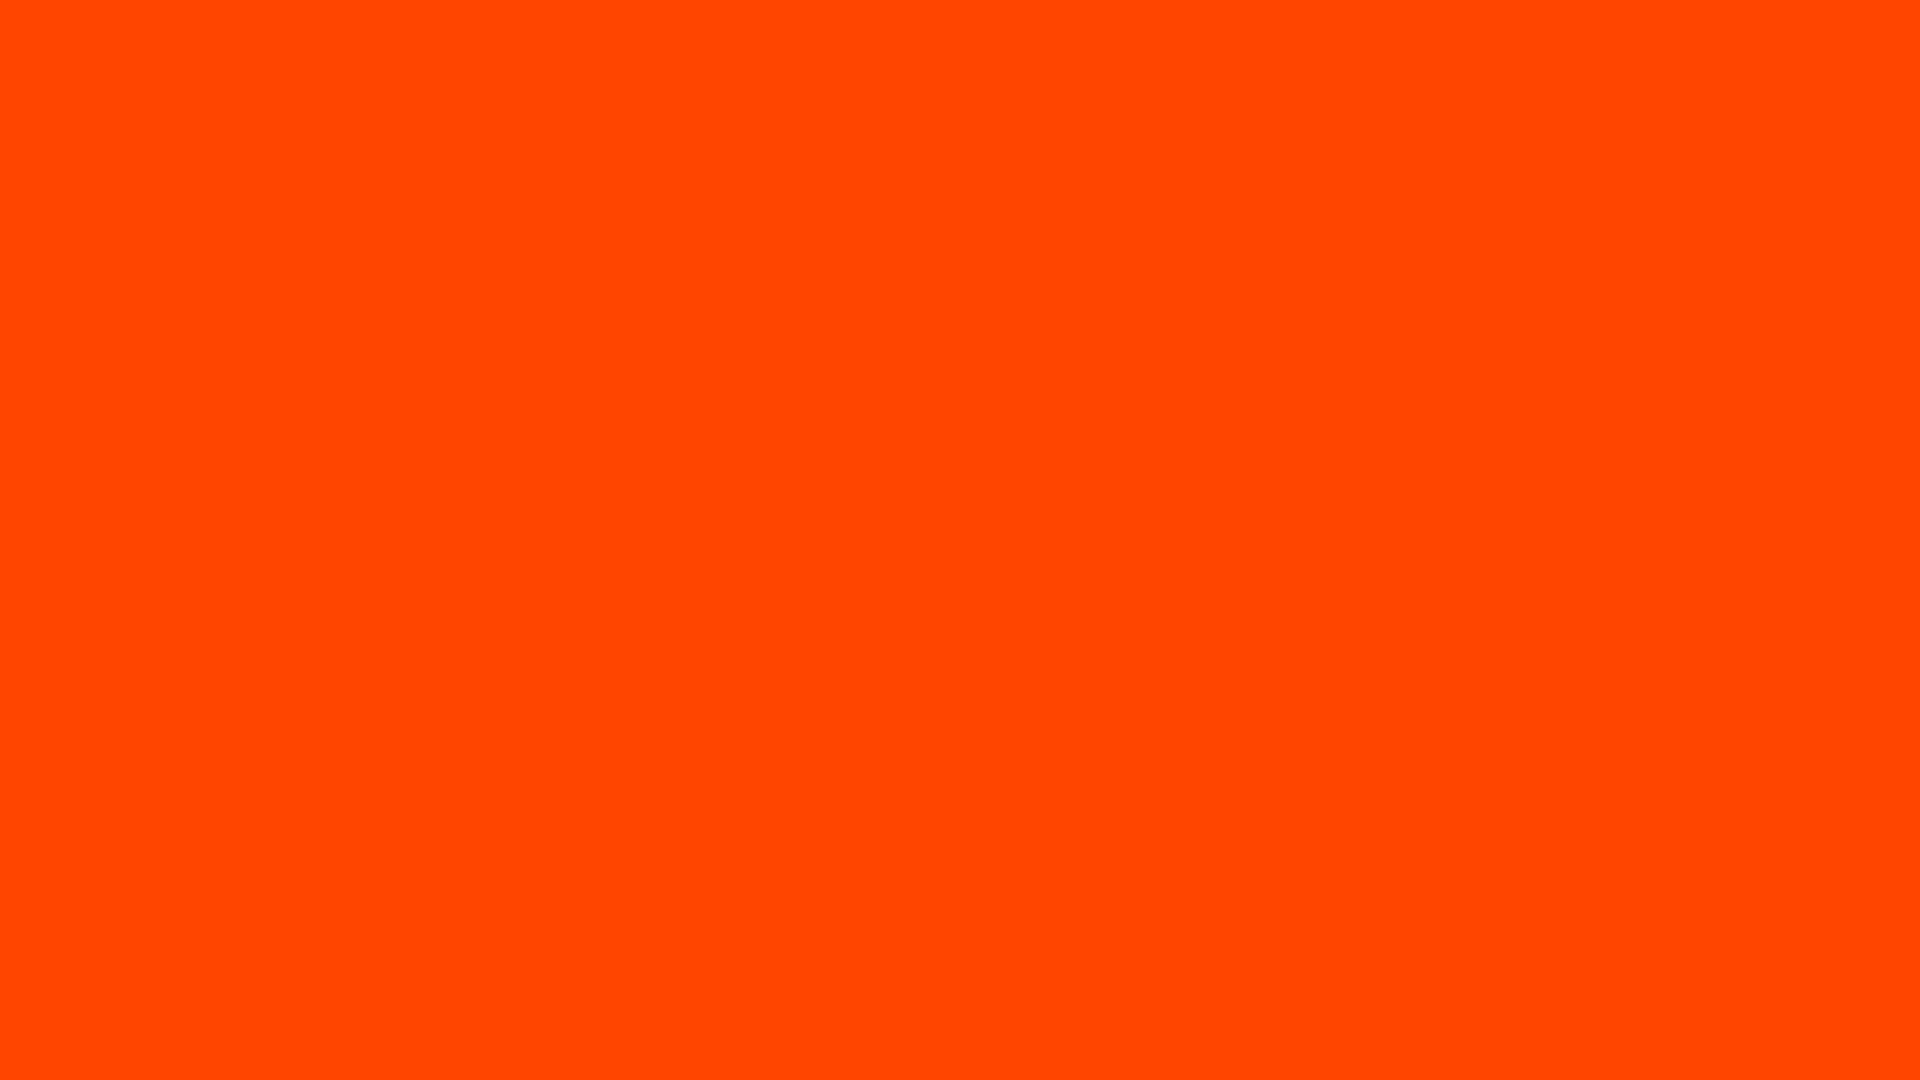 1920x1080 Orange-red Solid Color Background